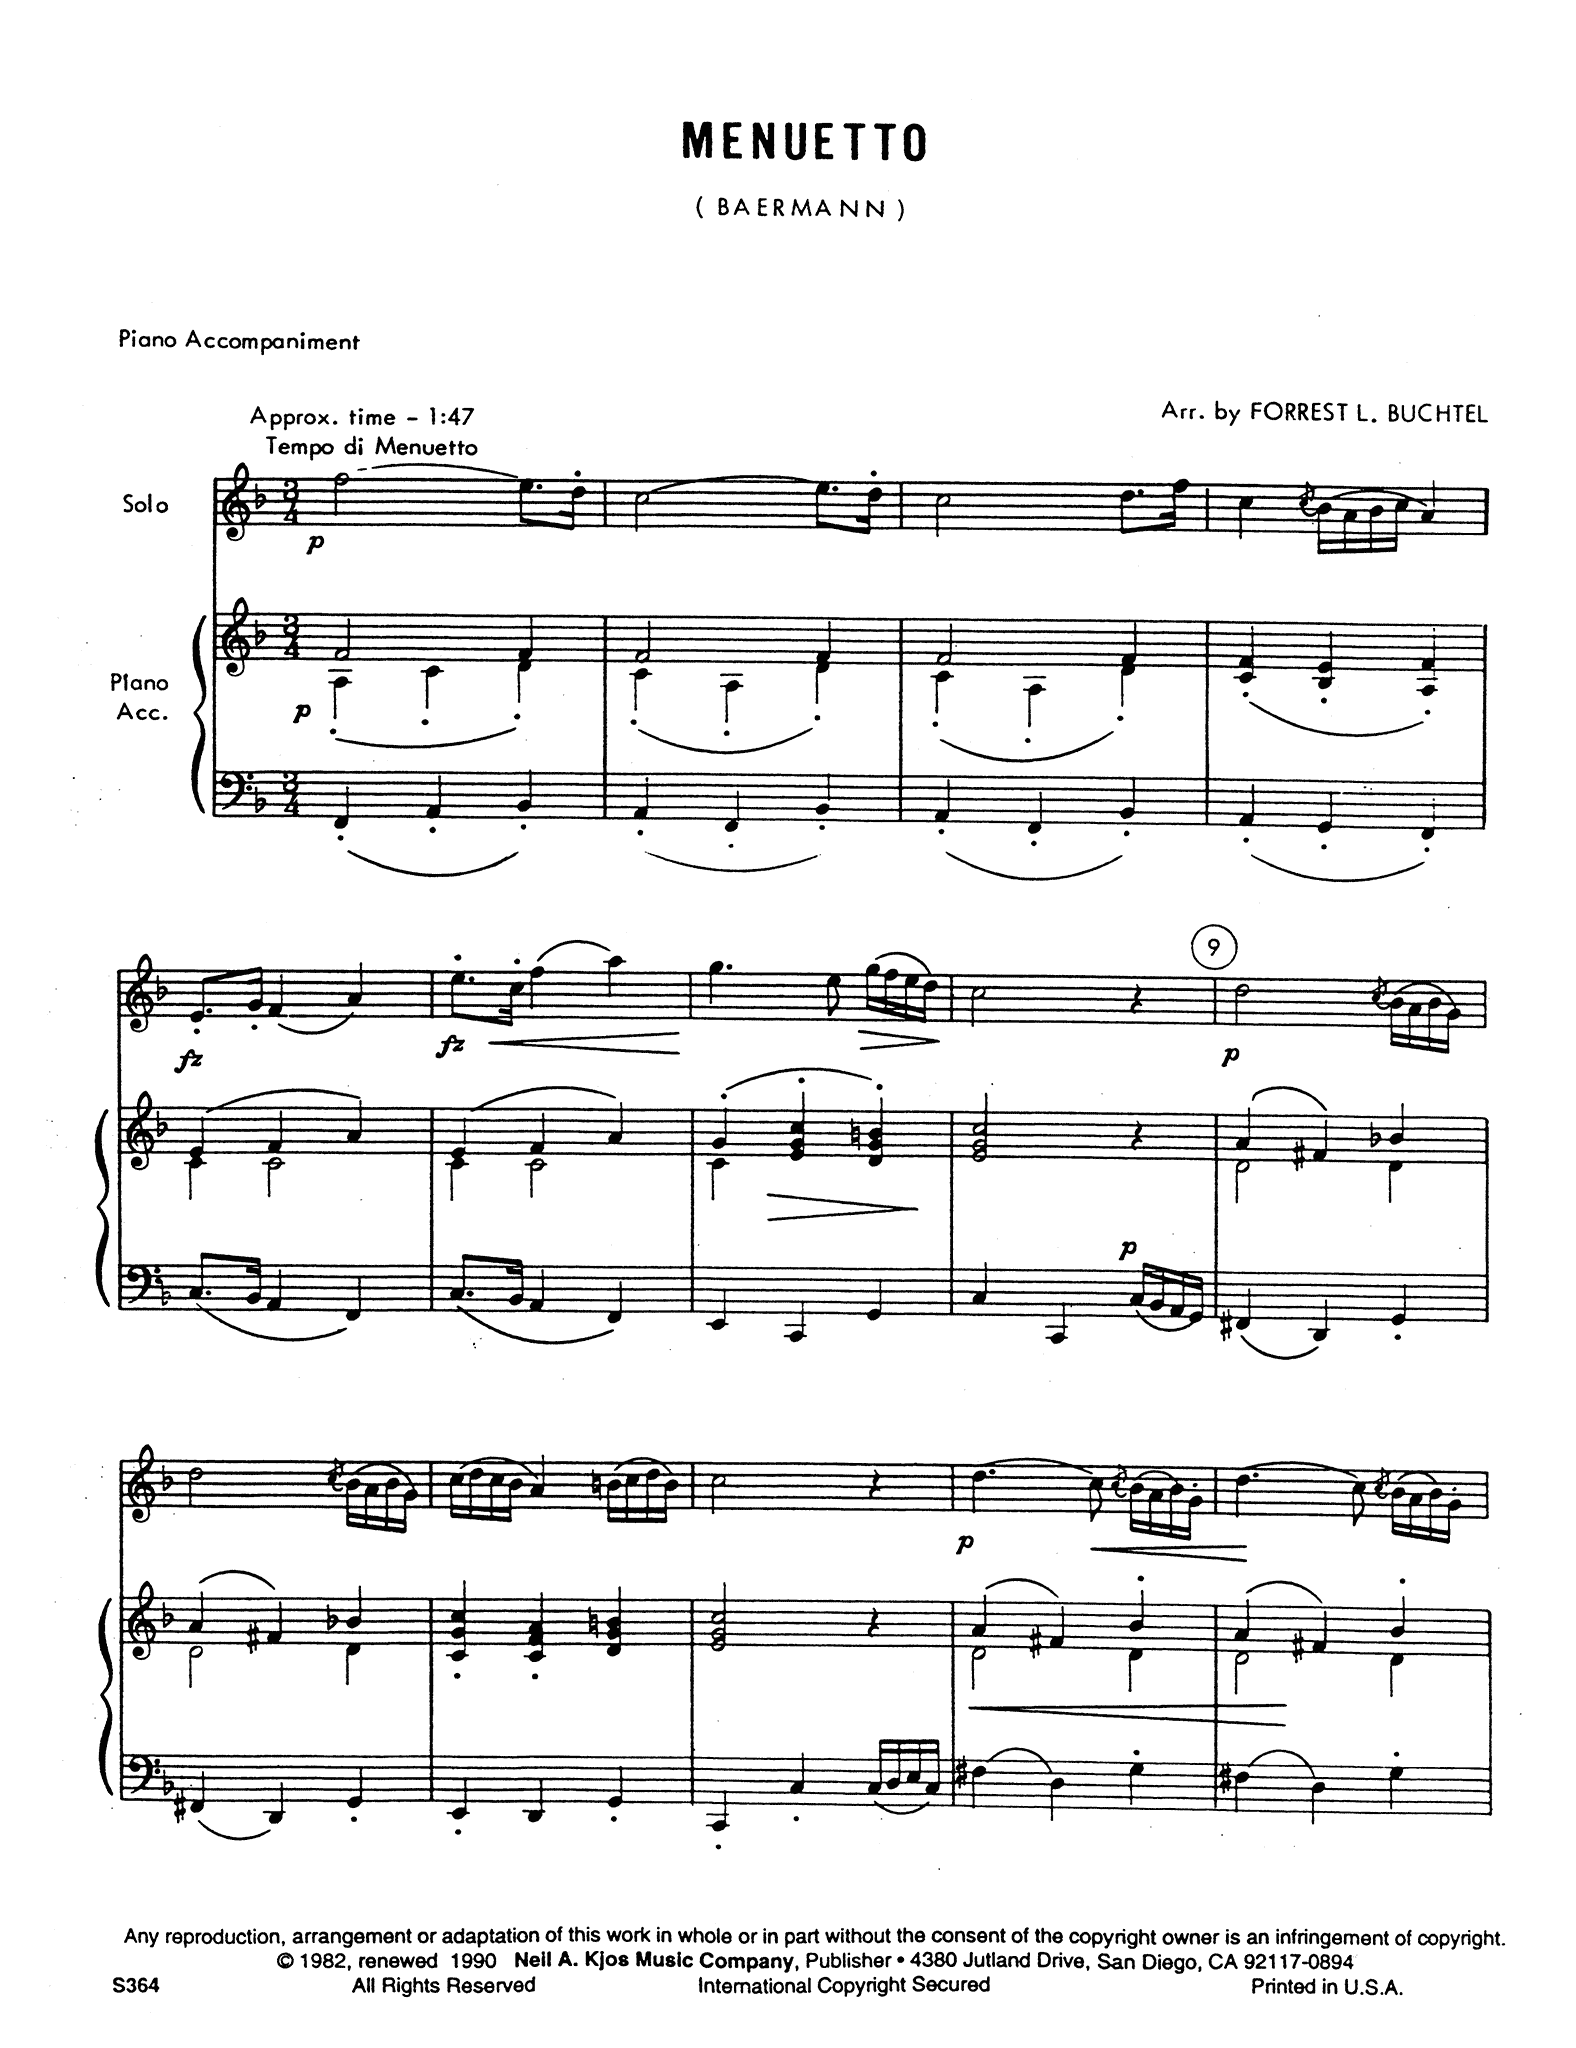 Baermann Menuetto from Clarinet Method, Op. 63, Div. II No. 19 score